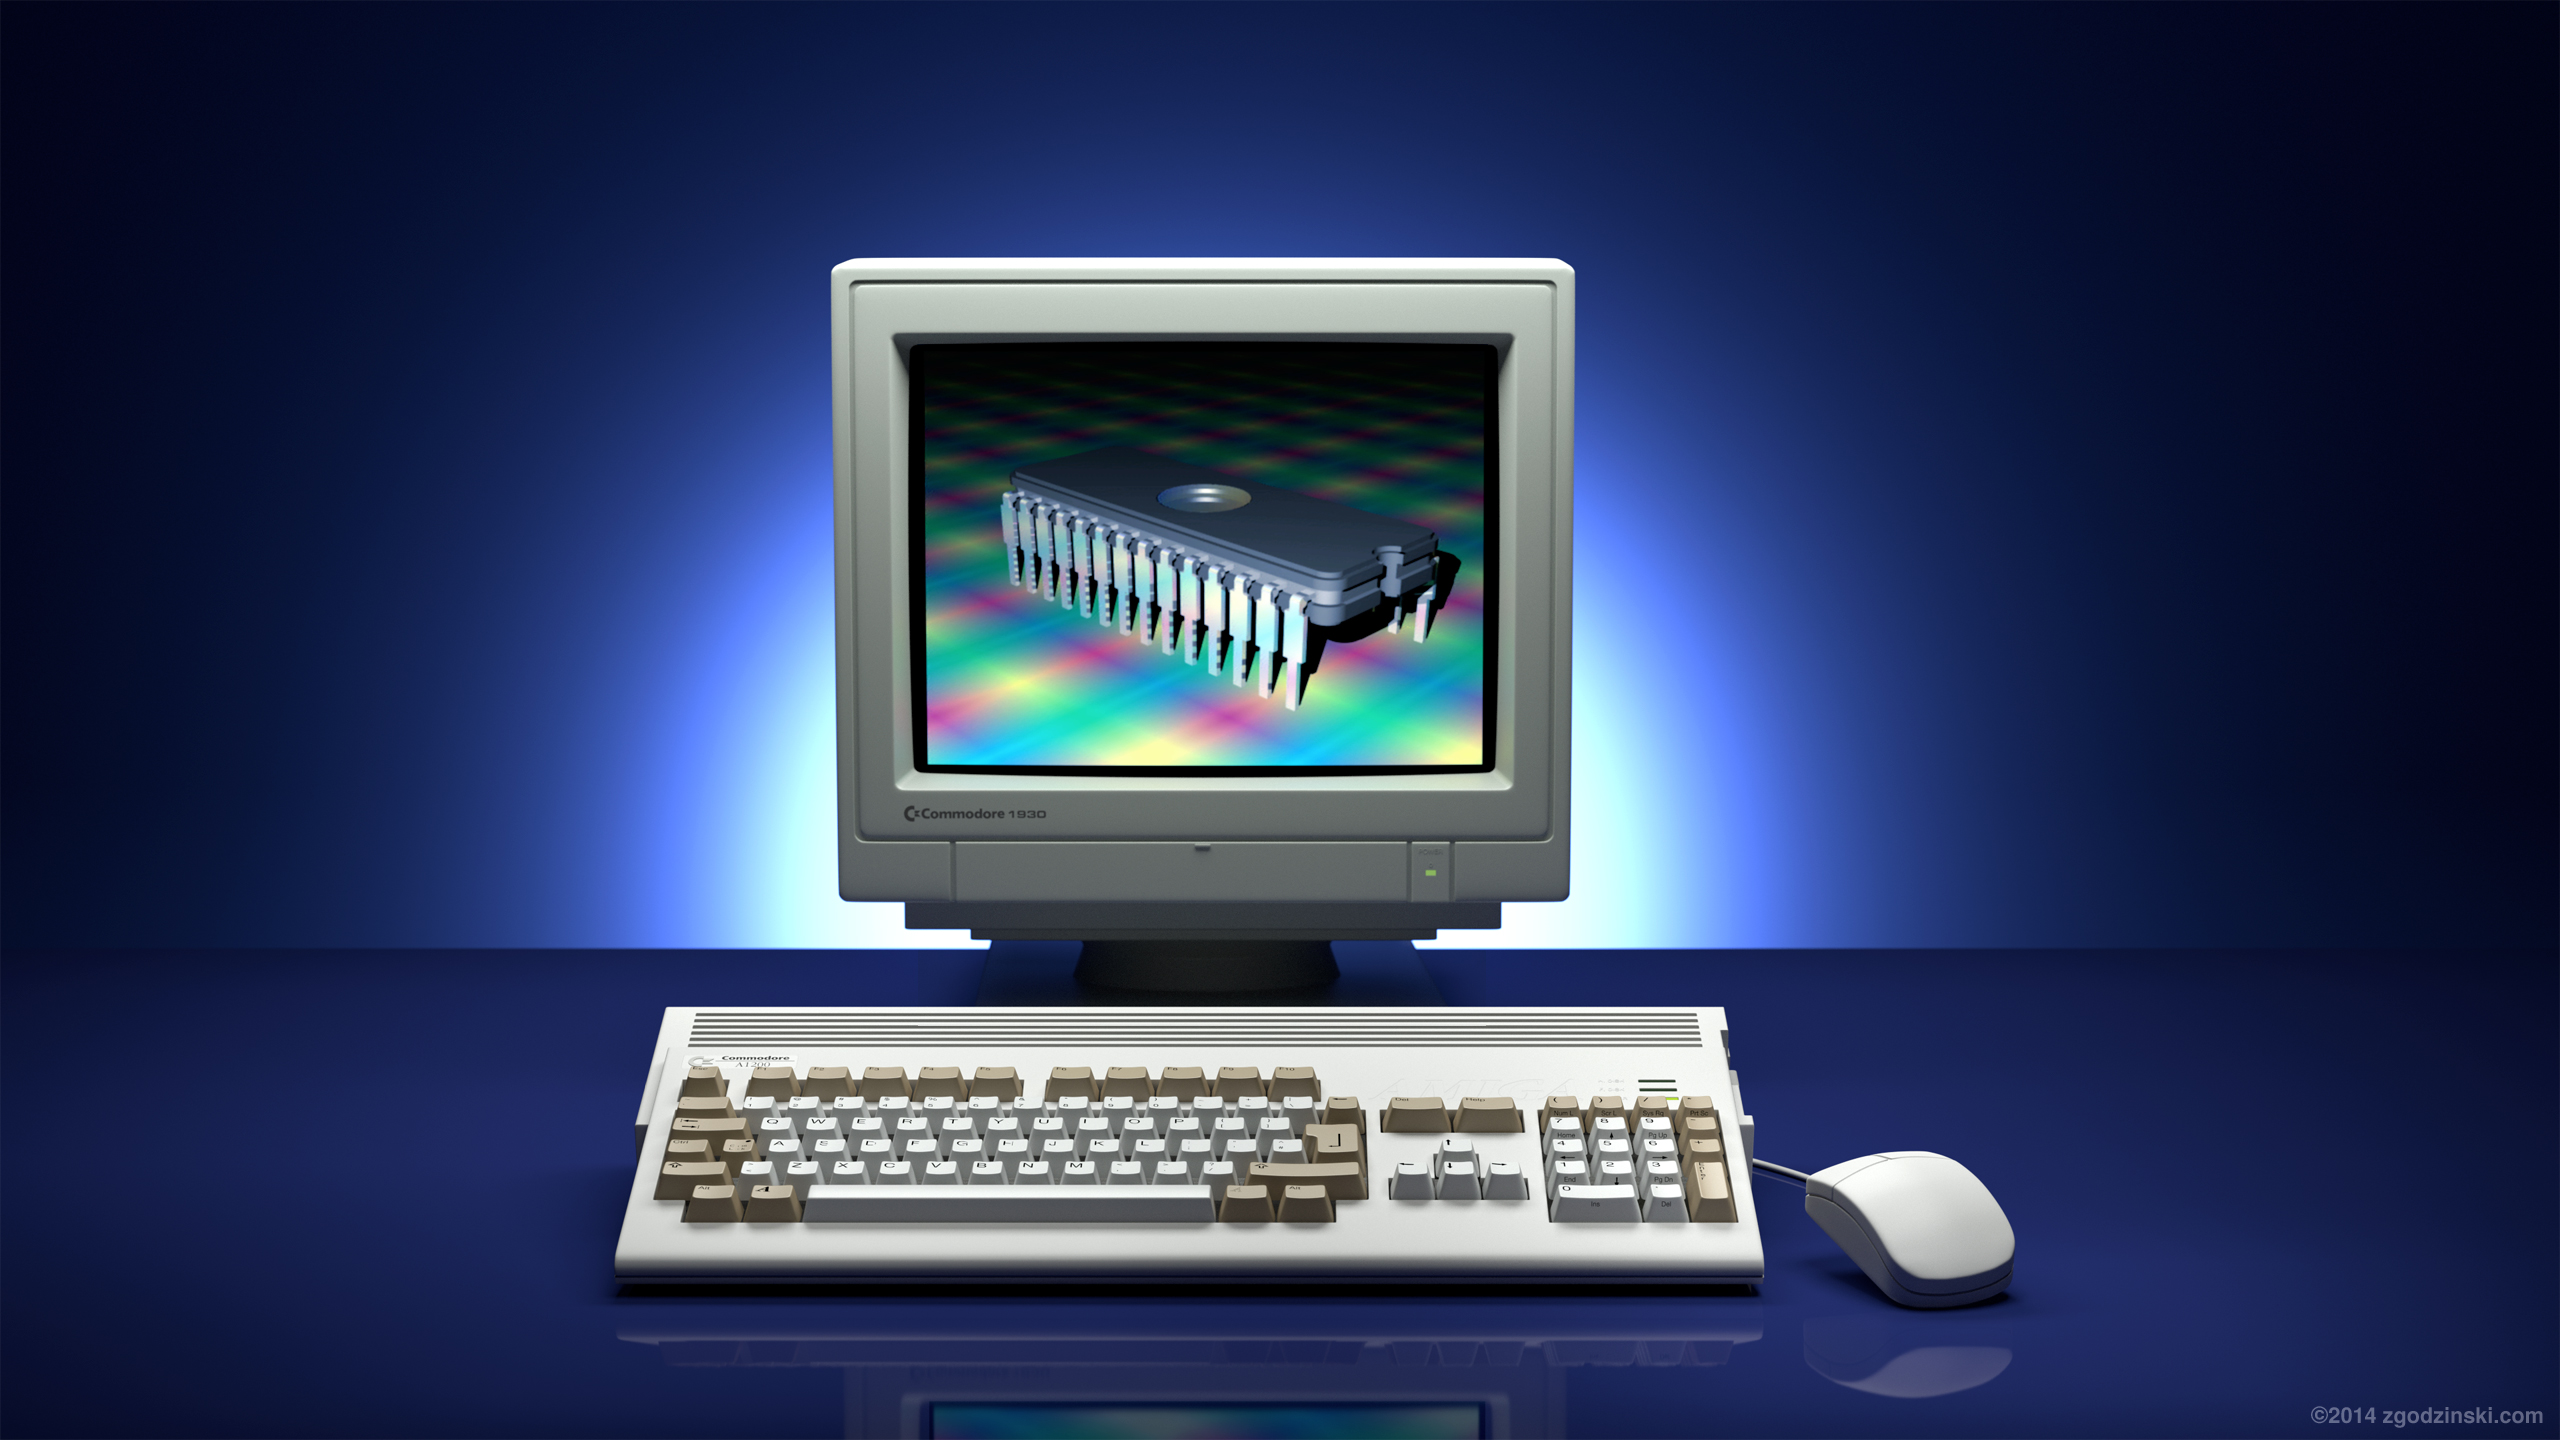 Commodore Amiga 1200 photo ad remake no 2 in 3D by zgodzinski on ...